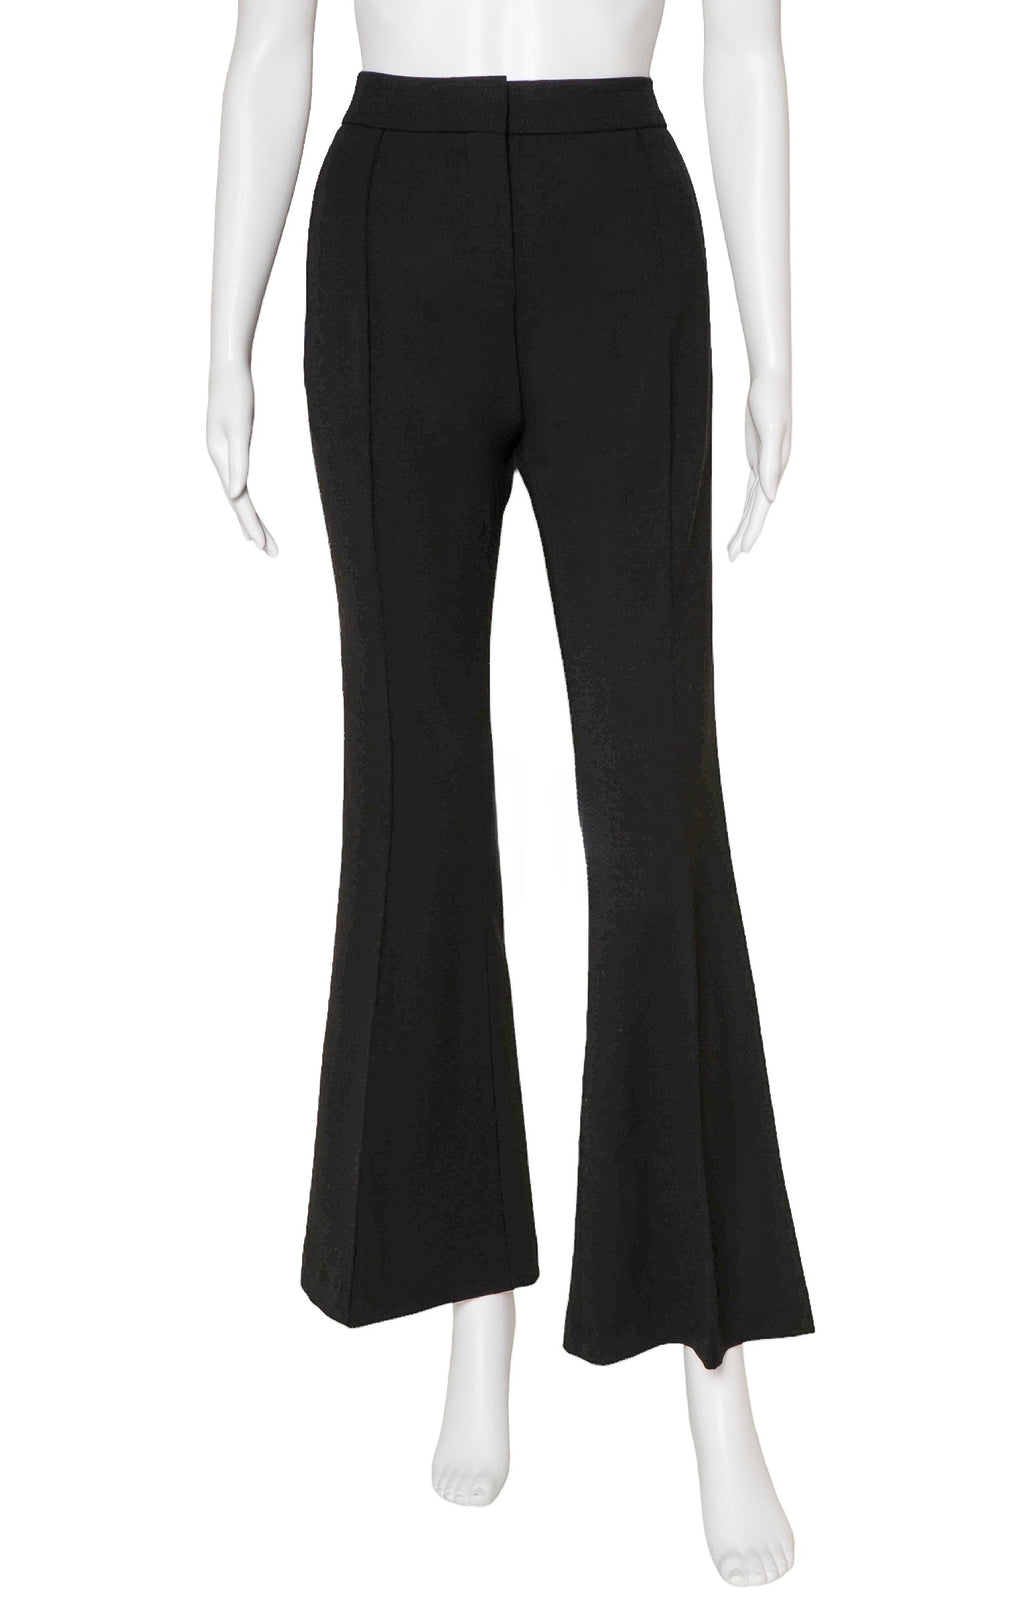 Pants Size: No size tags, fit like US 30/10 – Kardashian Kloset